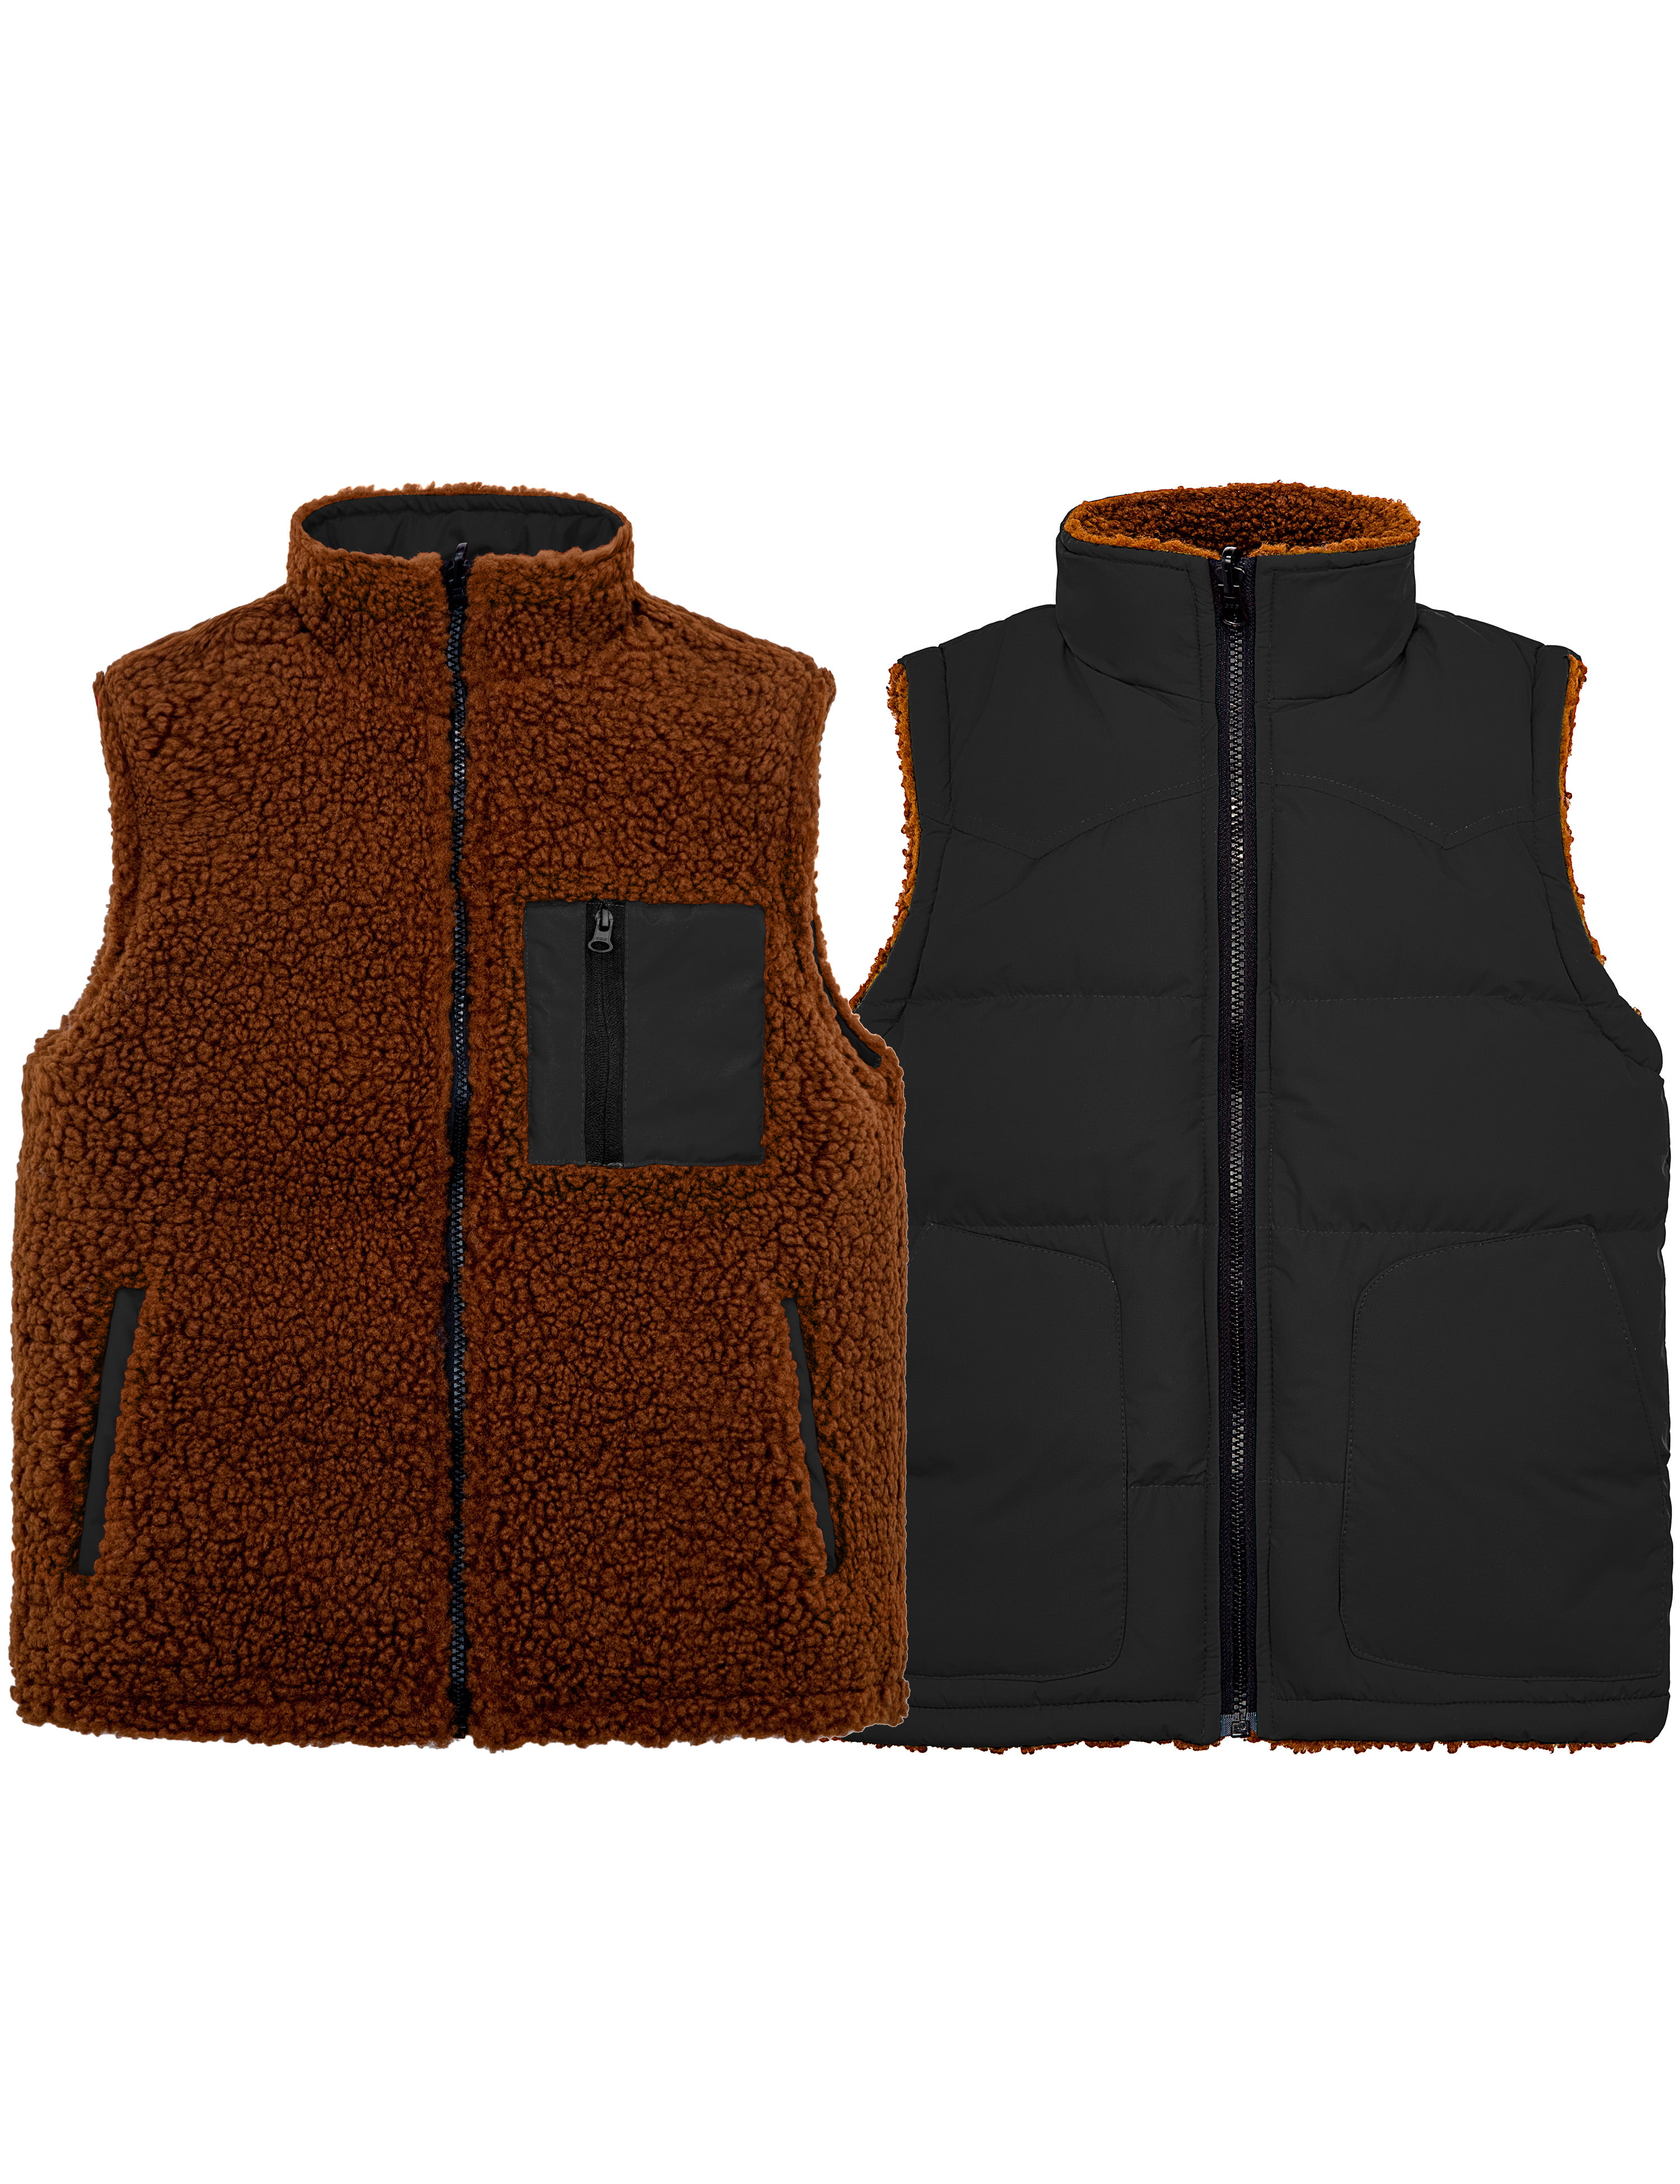 Wantdo Boys Winter Hooded Puffer Fleece Vest Warm Sleeveless Thick Jacket